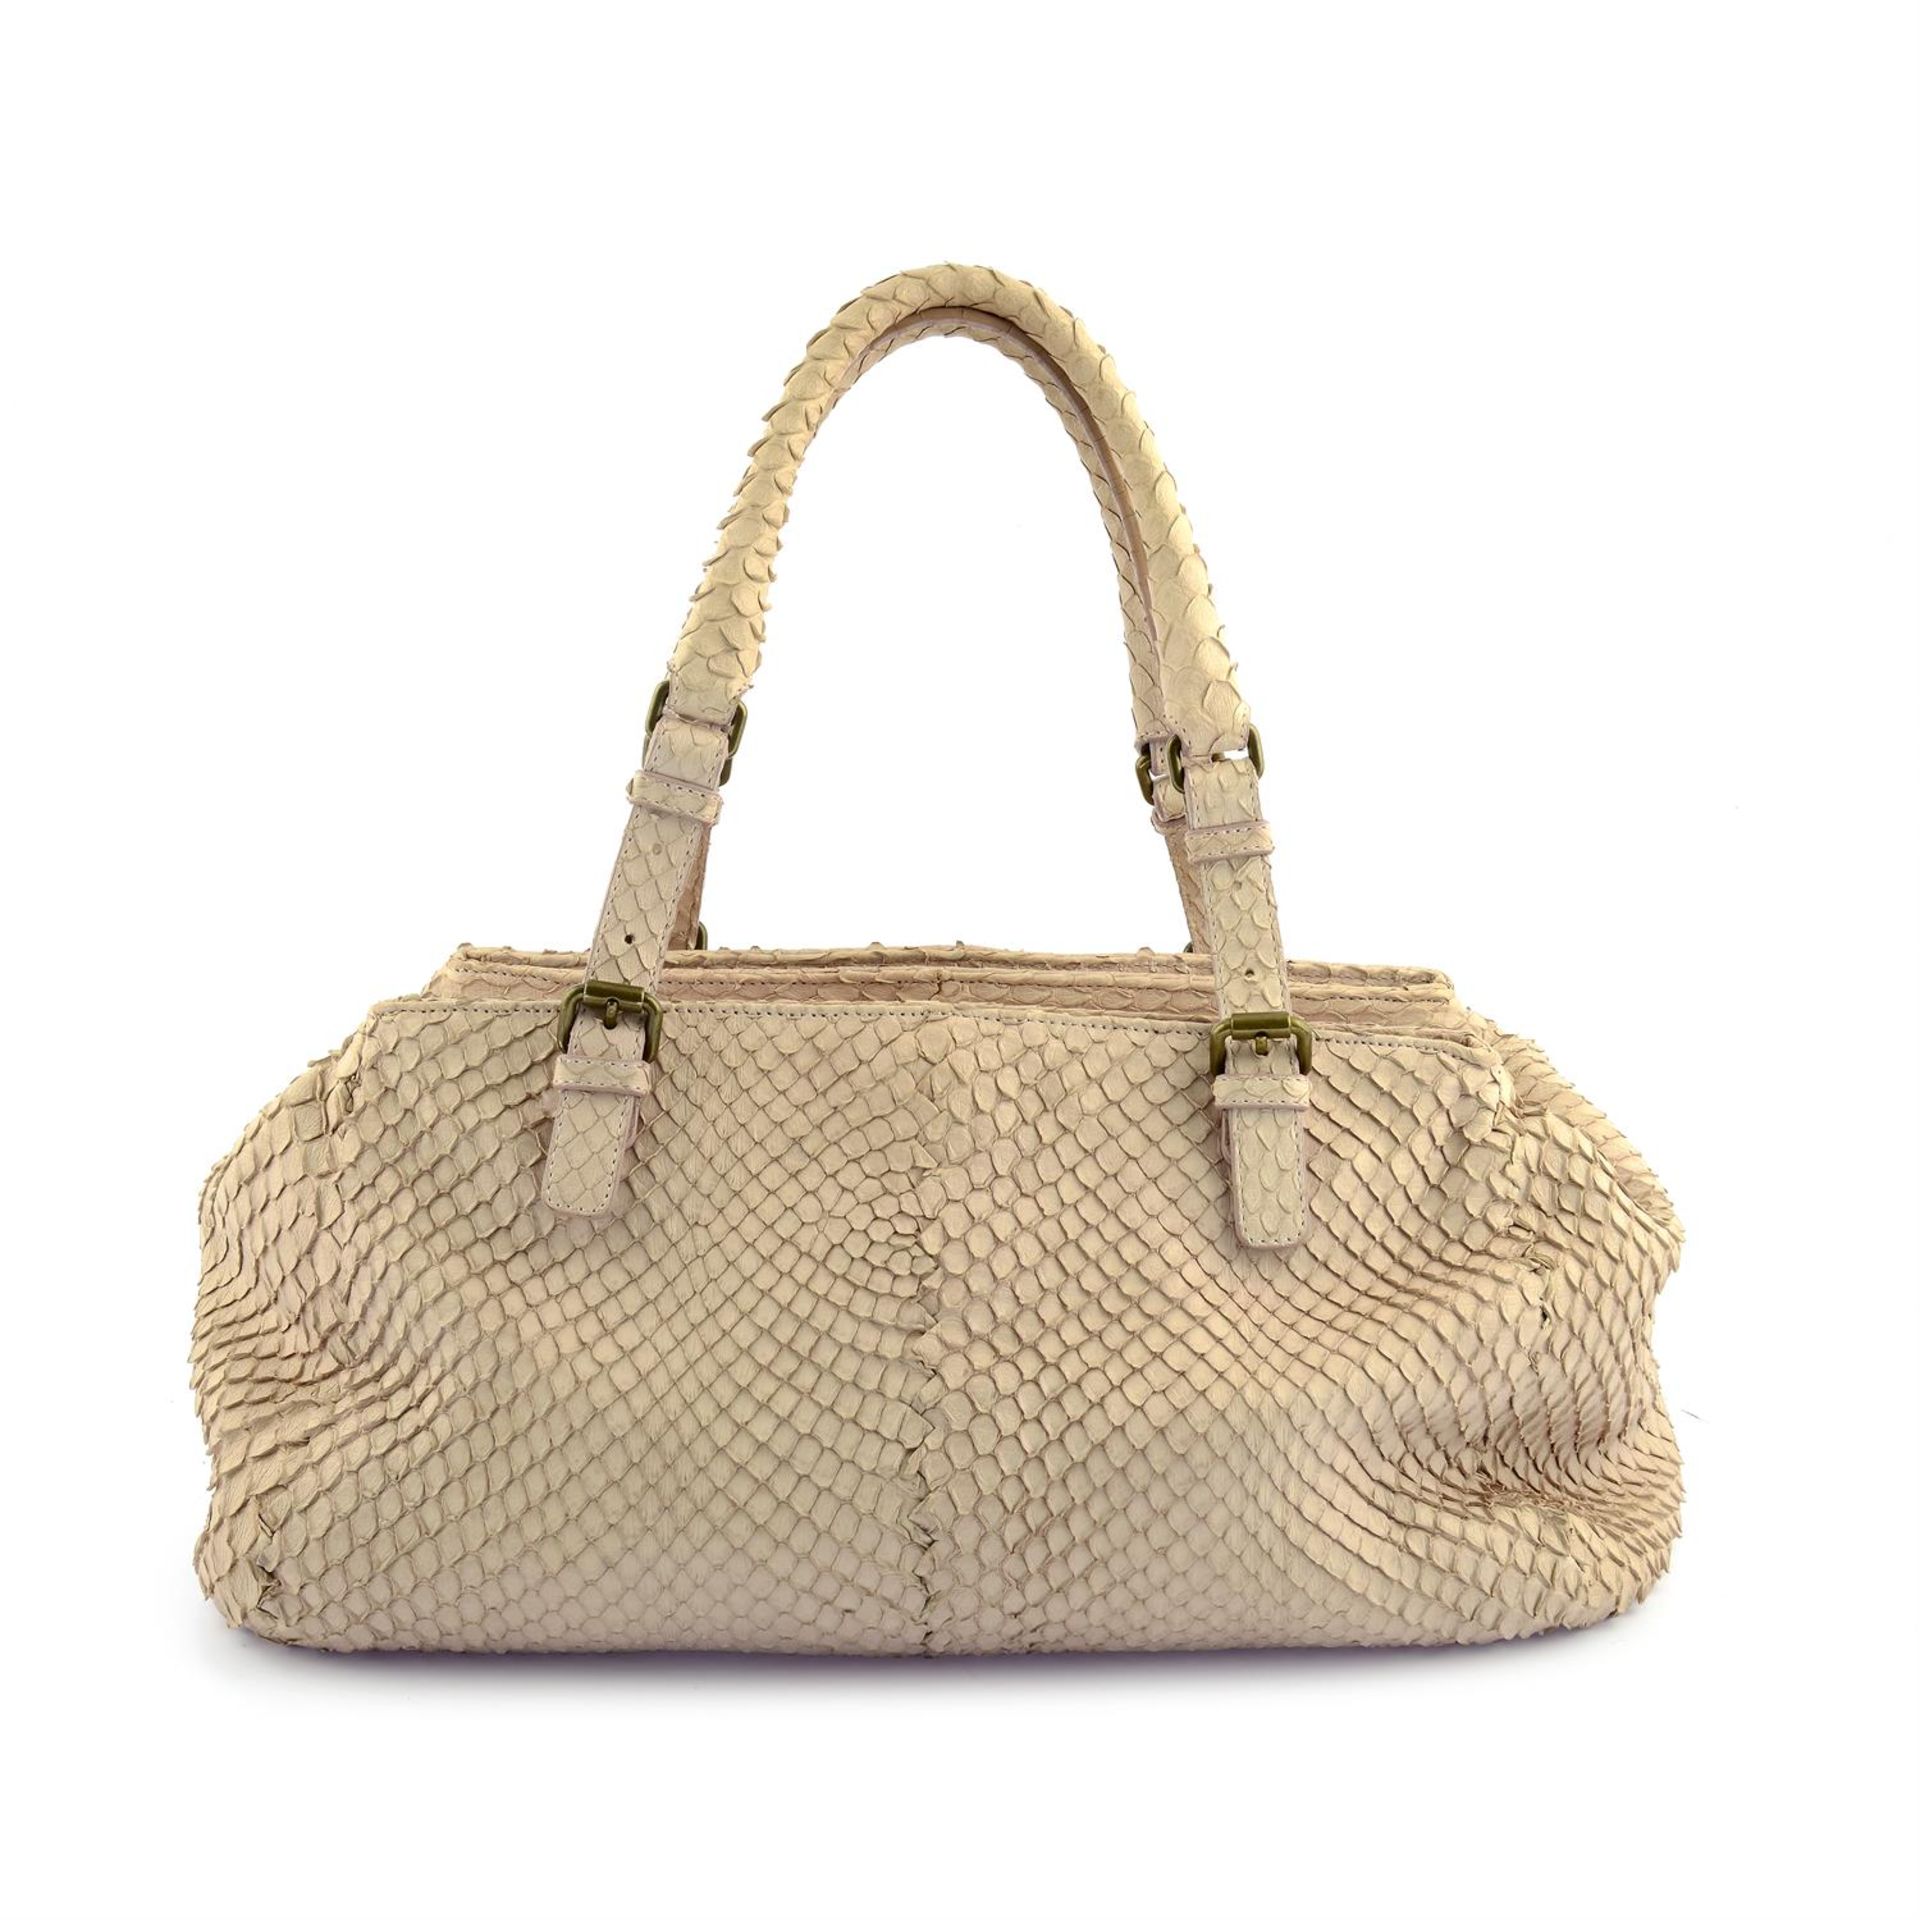 BOTTEGA VENETA - a beige Python leather handbag.